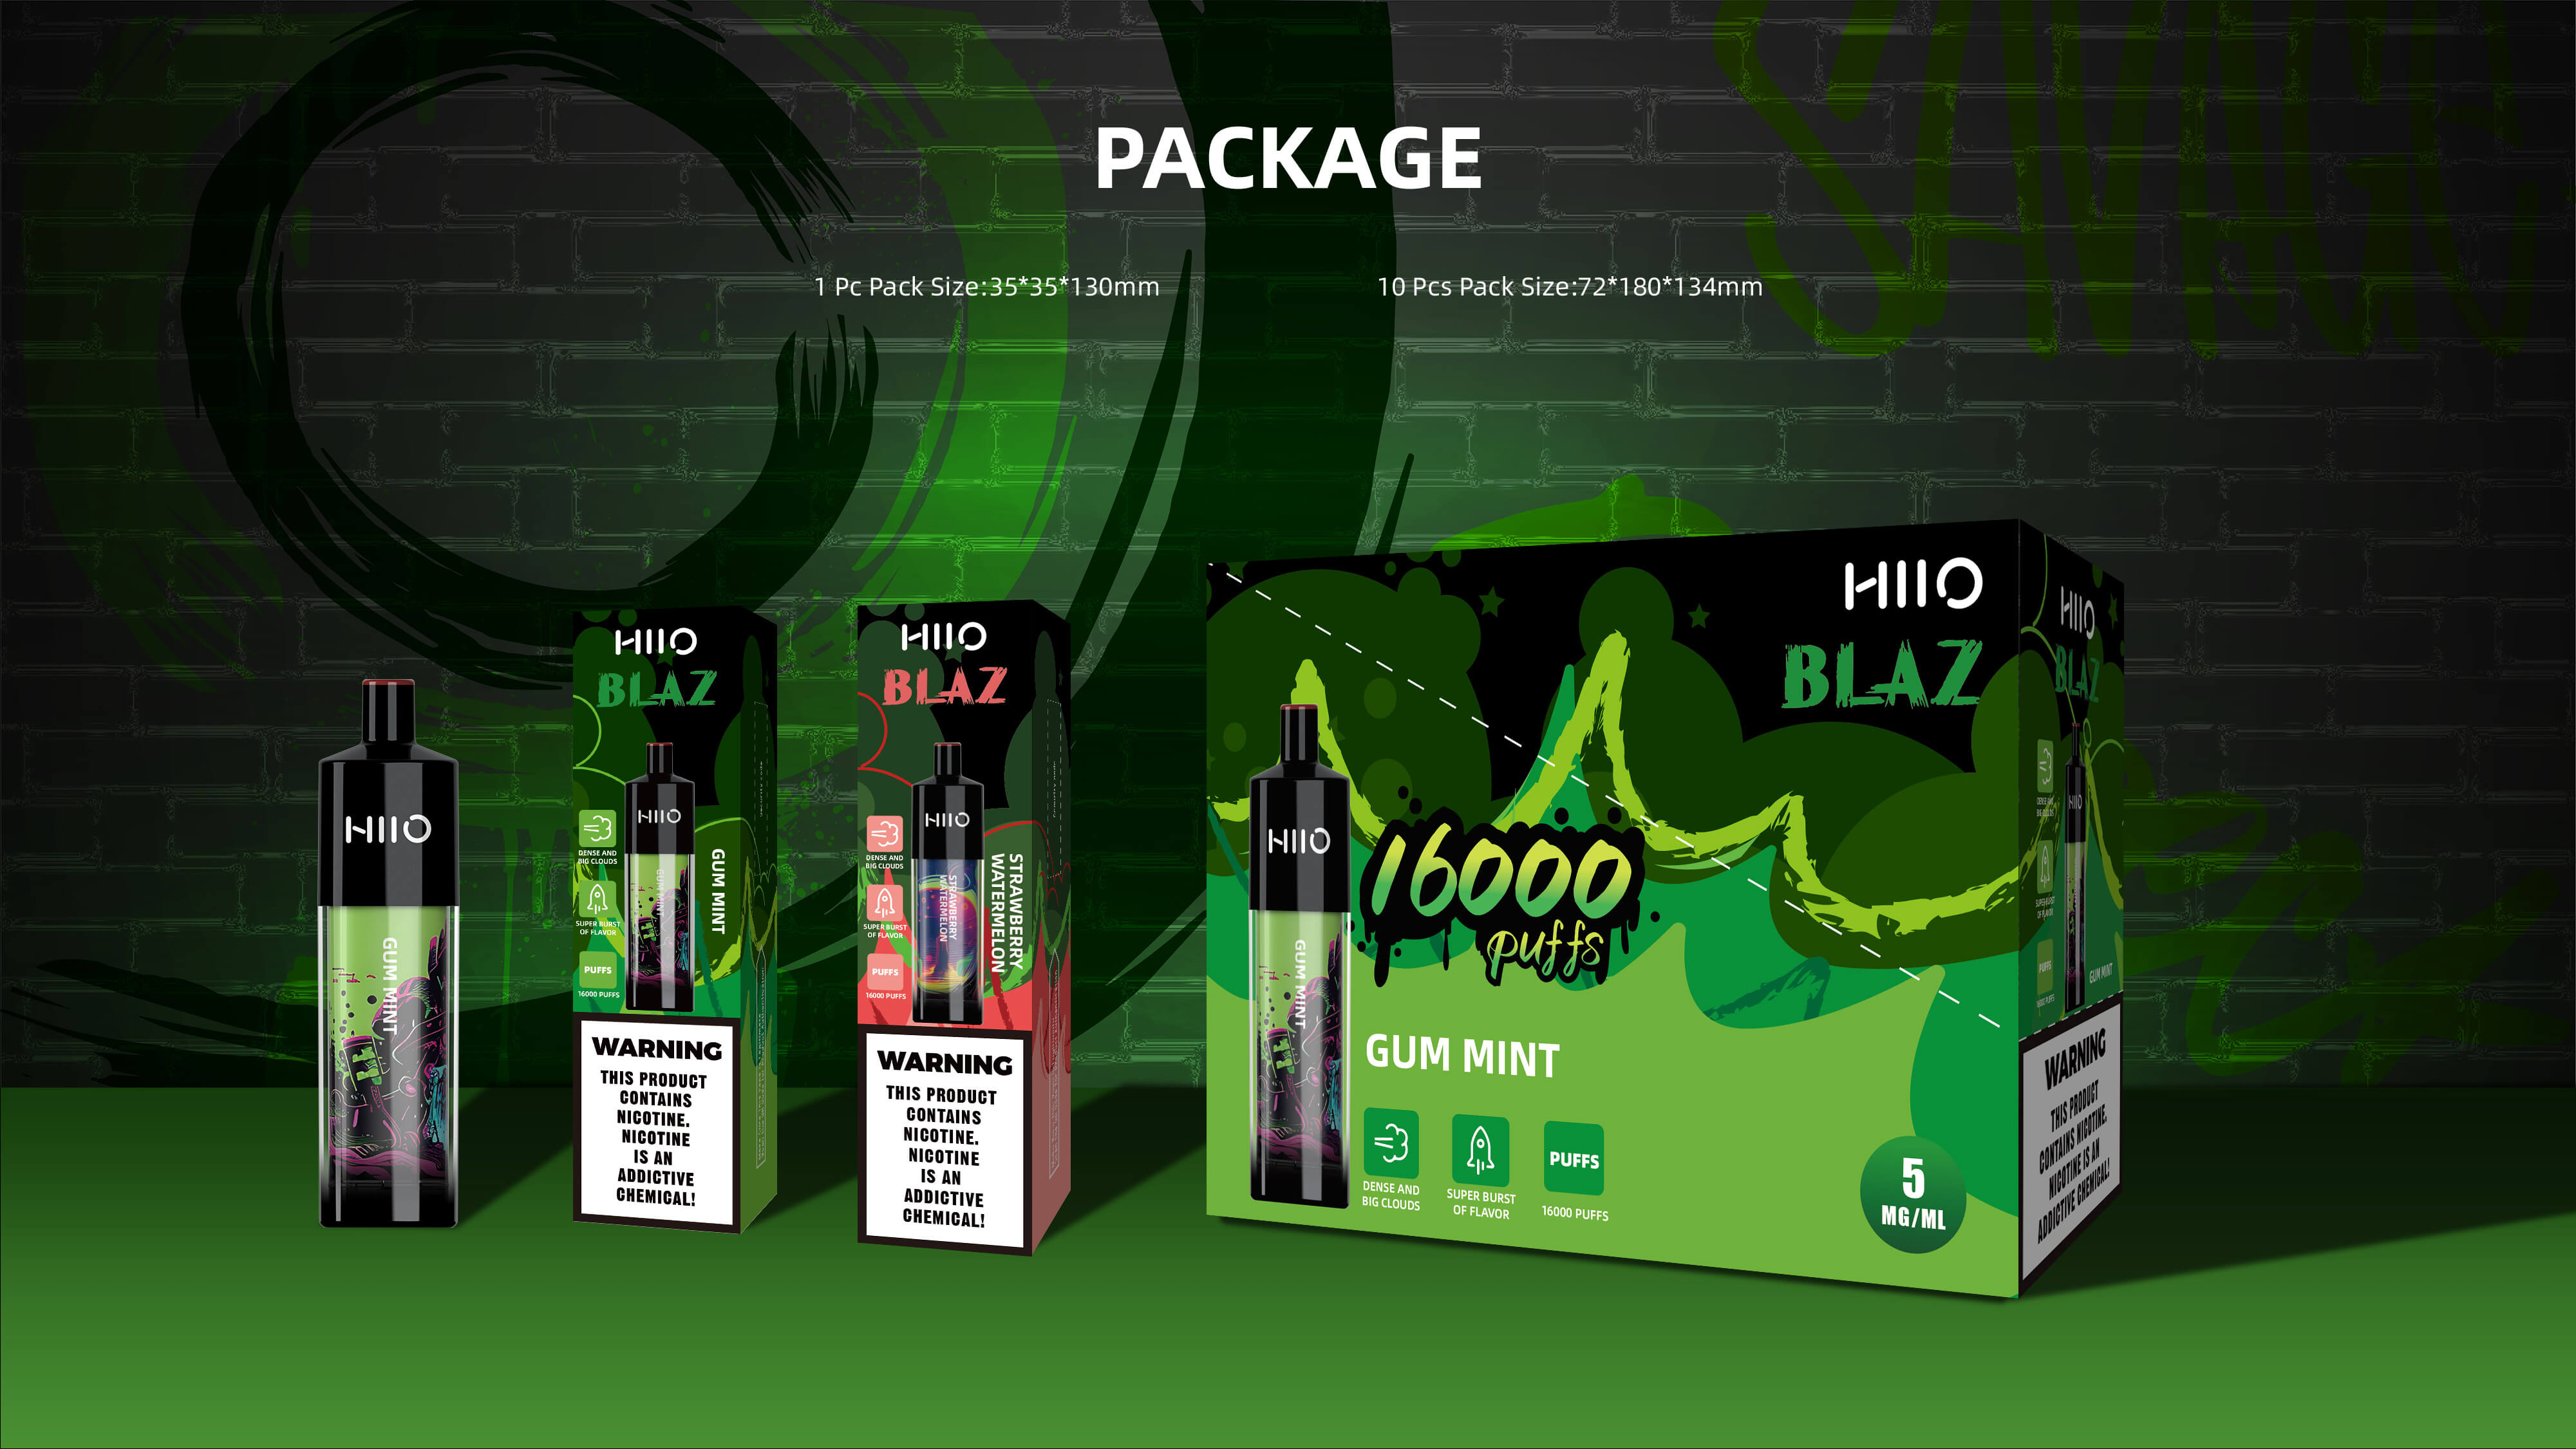 hiio blaz package